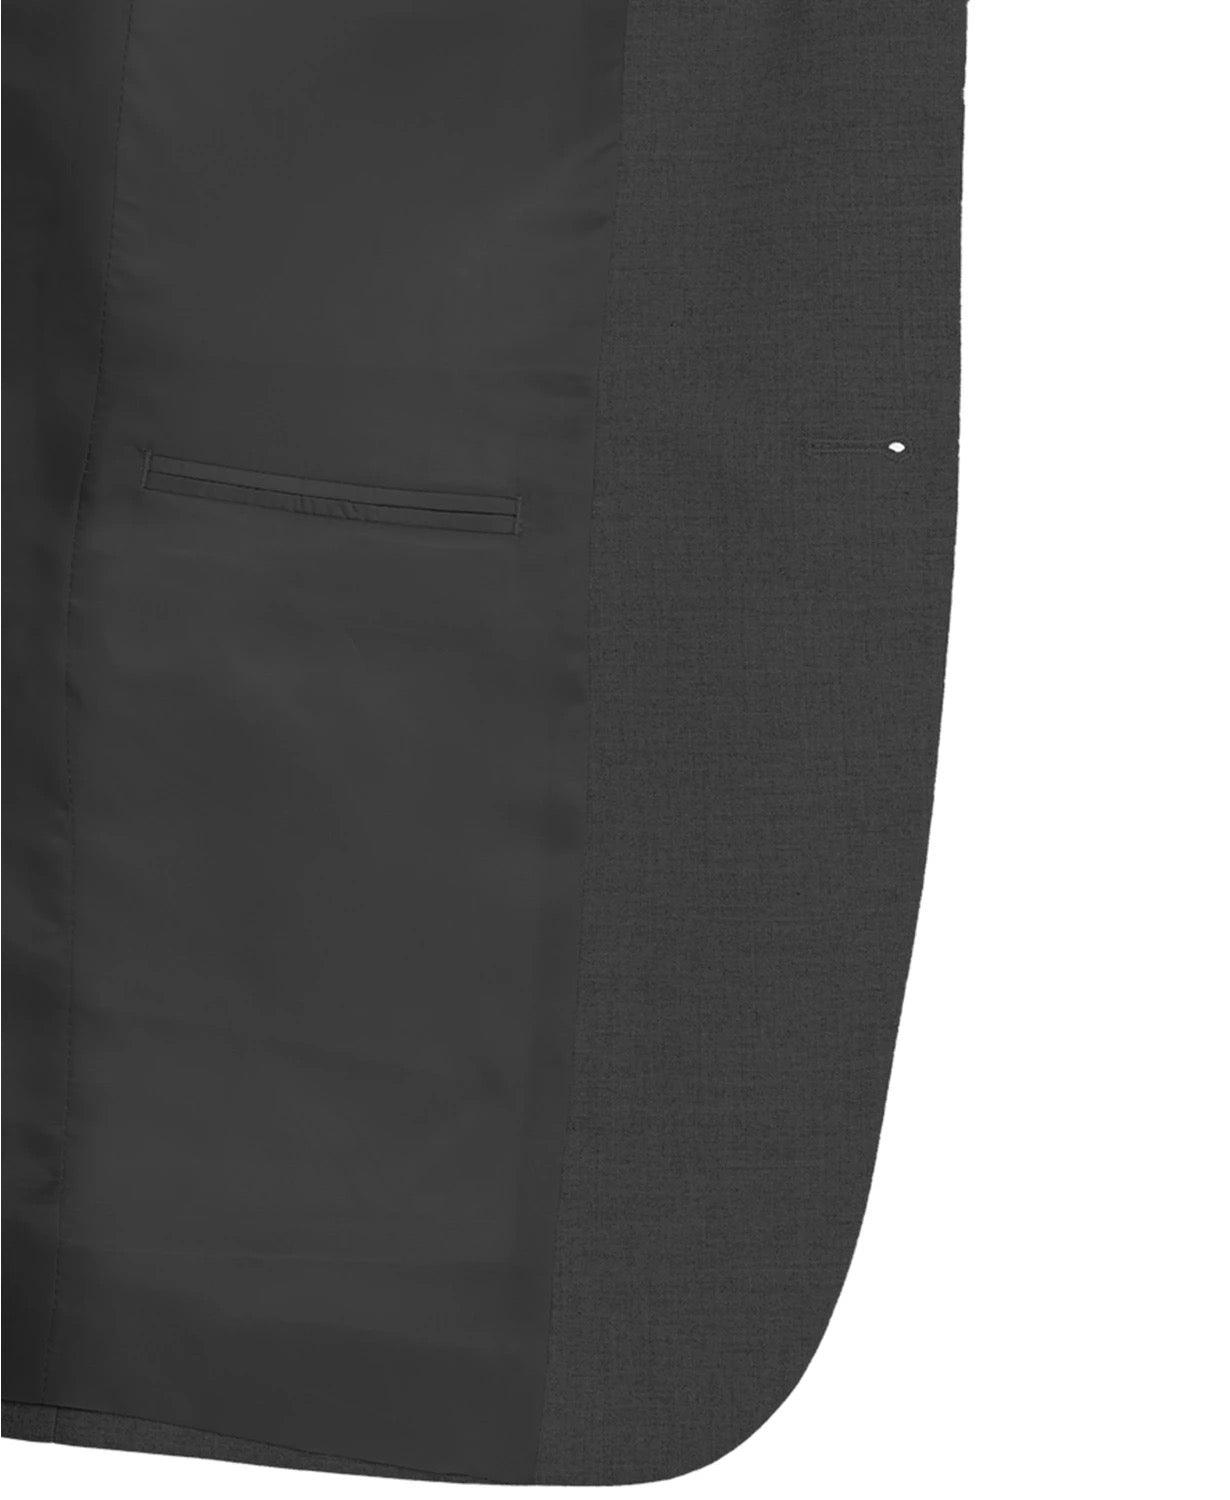 DKNY Men's Suit Jacket Charcoal 44L Modern-Fit Stretch / Two Button - Bristol Apparel Co